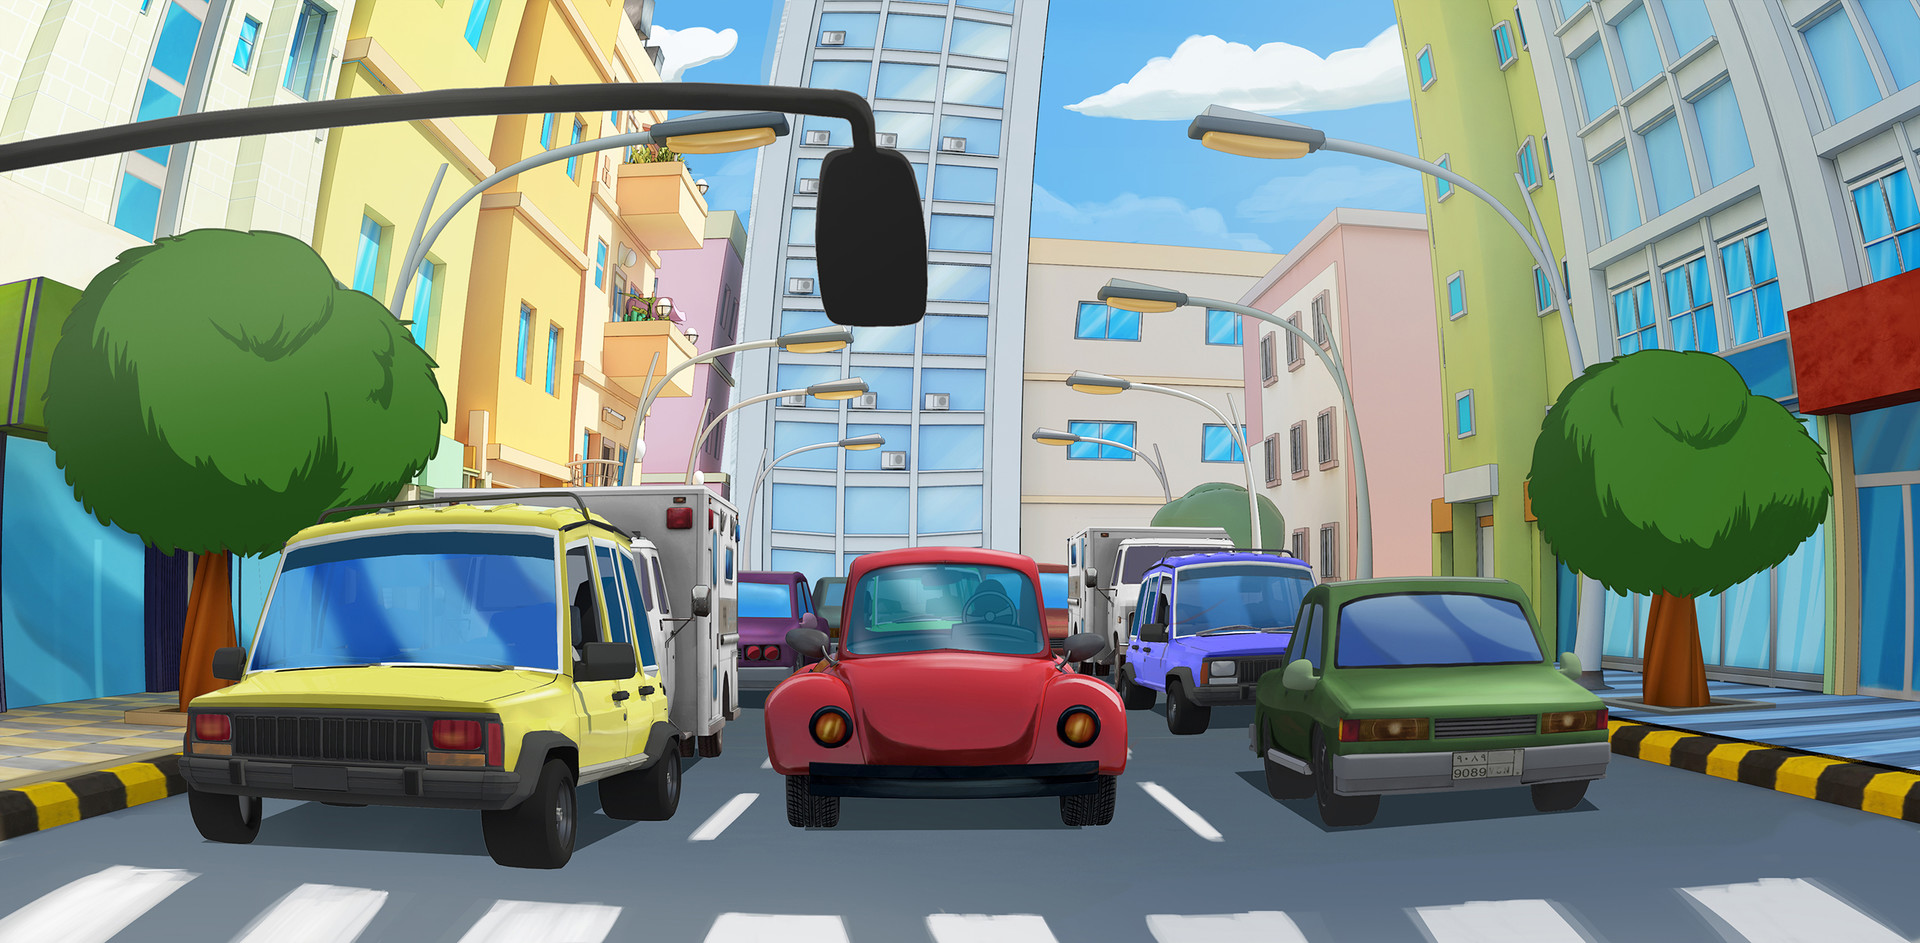 Ezz swafta - Traffic jam, Cartoon city